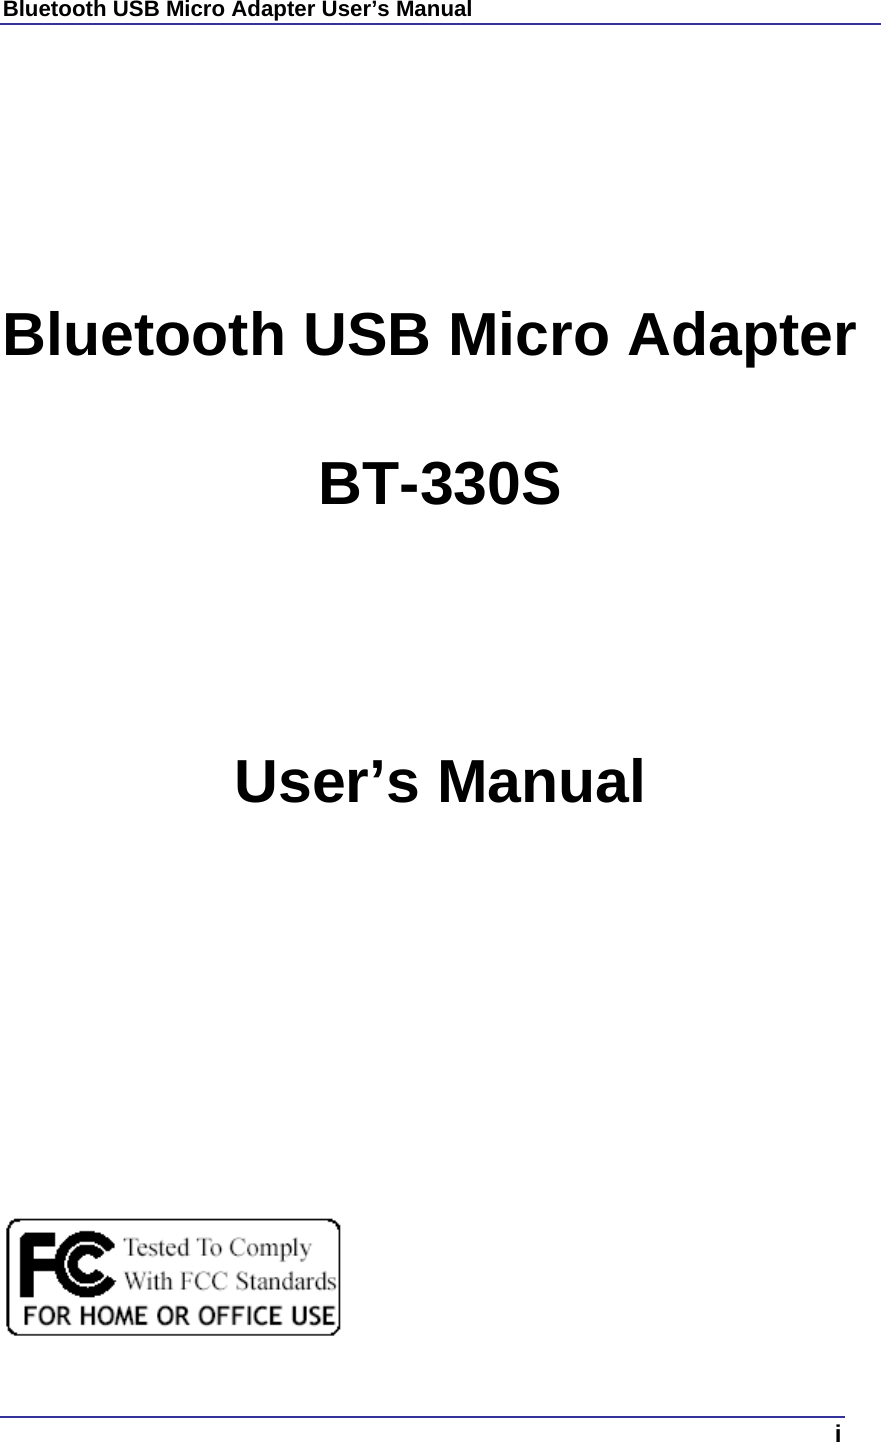 Bluetooth USB Micro Adapter User’s Manual  i       Bluetooth USB Micro Adapter BT-330S  User’s Manual                         